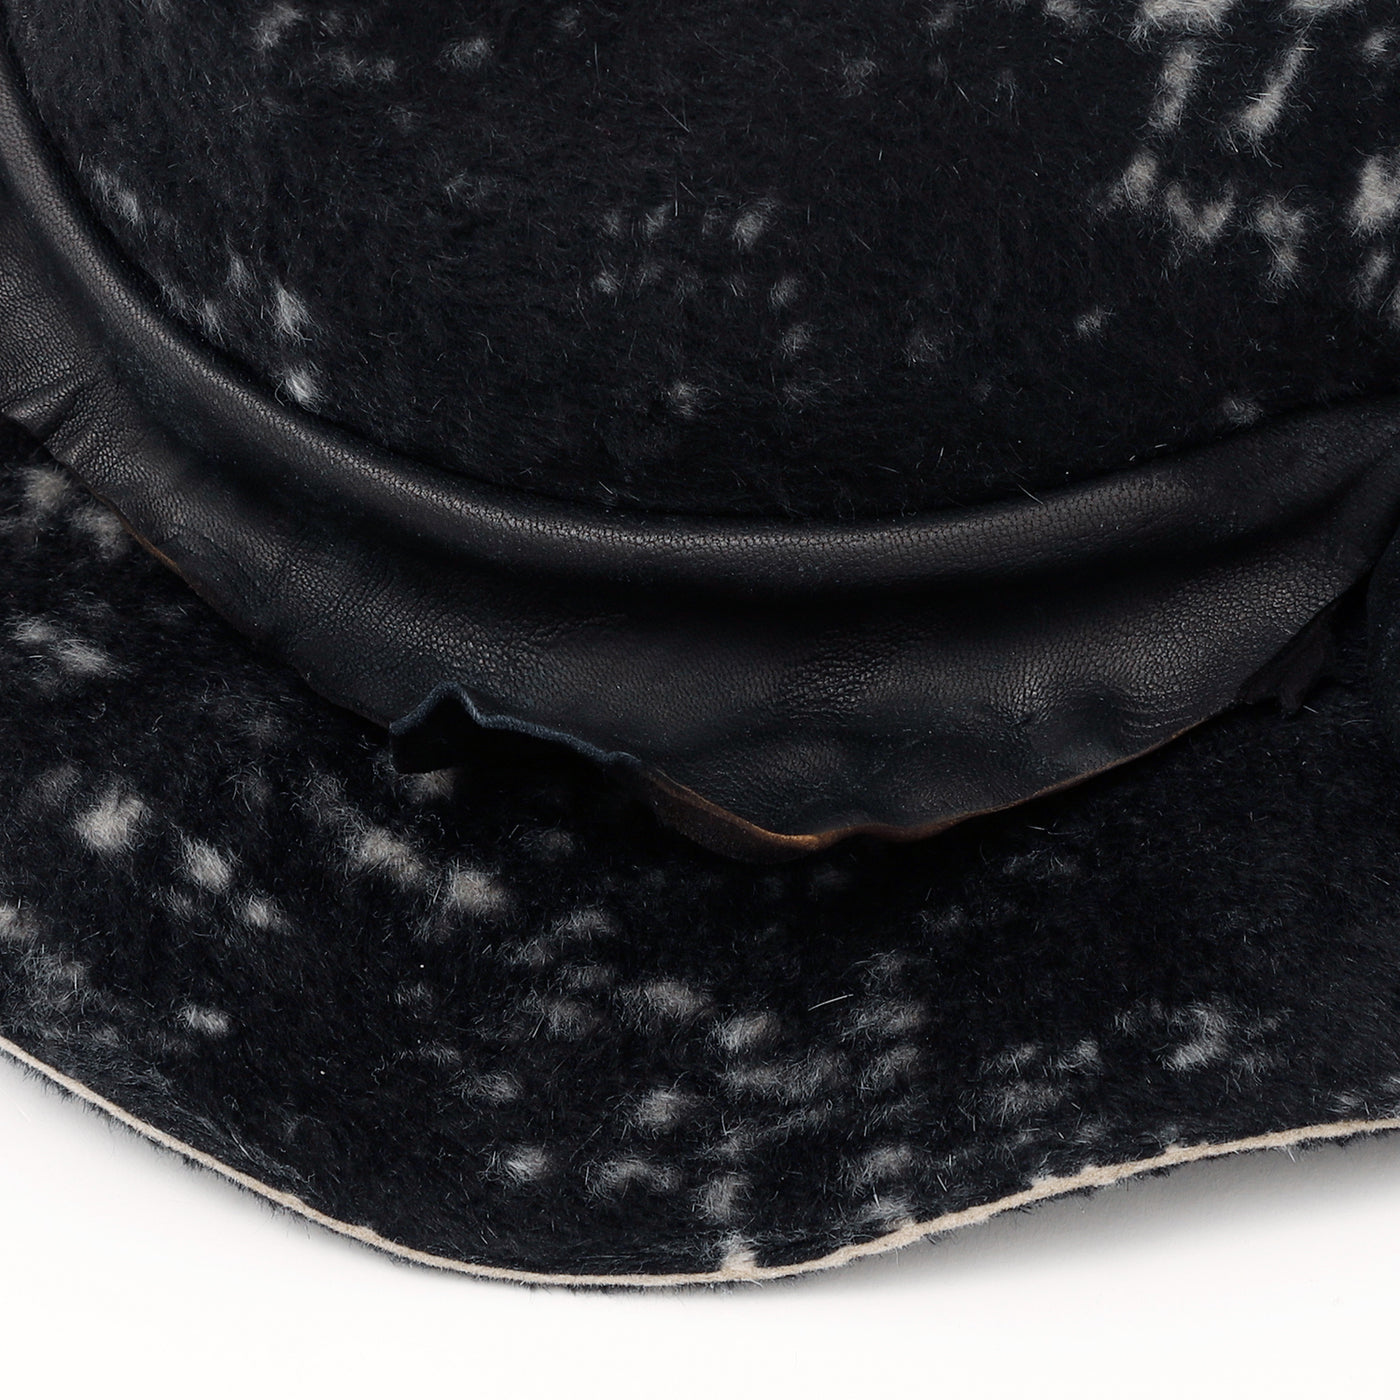 Snake Pattern Rabbit Fur Hat / BLACK